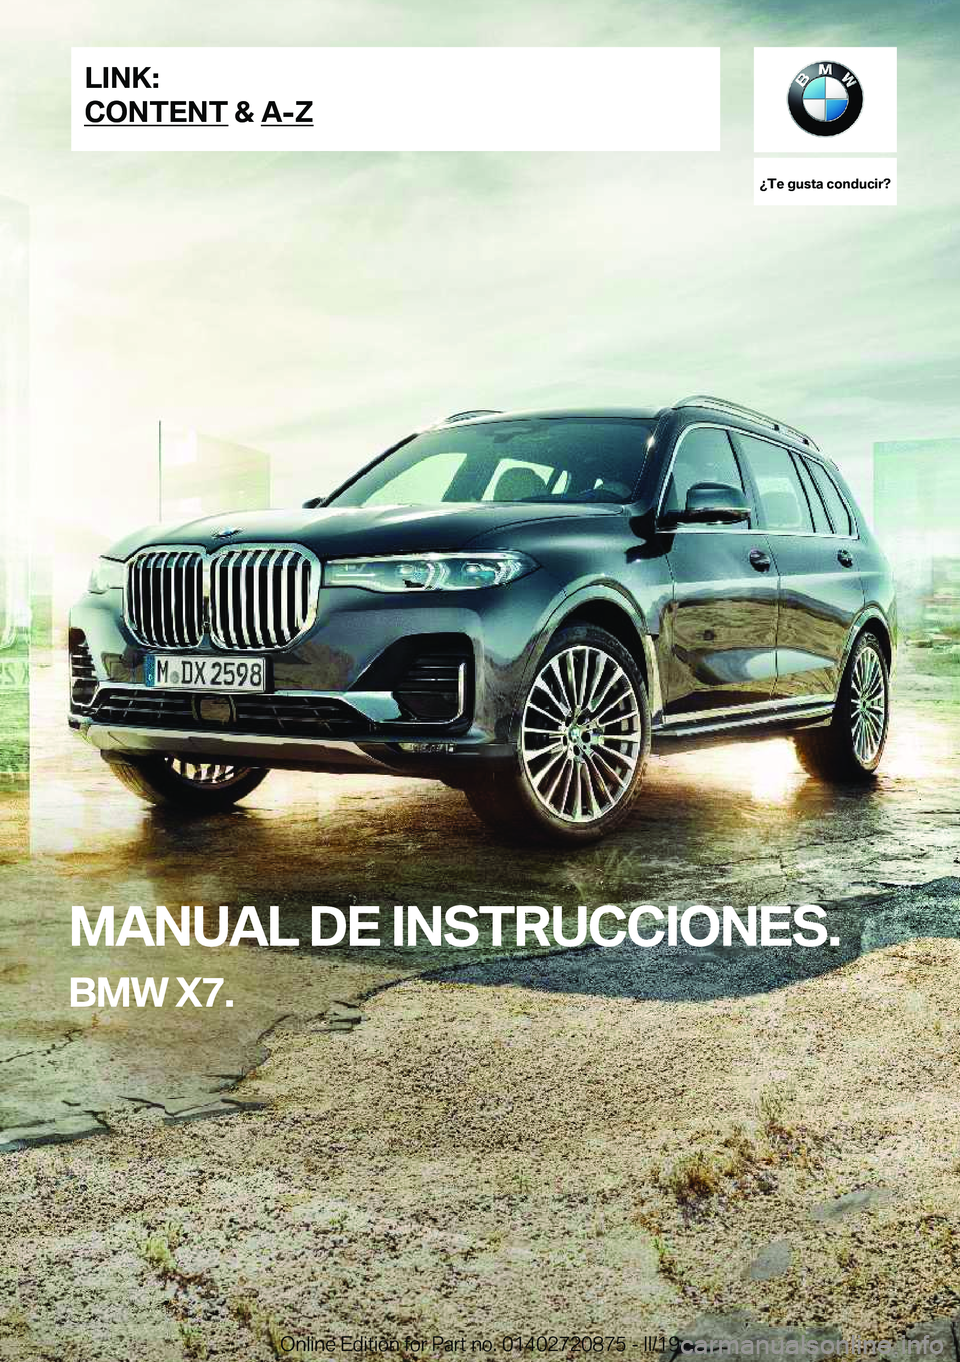 BMW X7 2019  Manuales de Empleo (in Spanish) ��T�e��g�u�s�t�a��c�o�n�d�u�c�i�r� 
�M�A�N�U�A�L��D�E��I�N�S�T�R�U�C�C�I�O�N�E�S�.
�B�M�W��X�7�.�L�I�N�K�:
�C�O�N�T�E�N�T��&��A�-�Z�O�n�l�i�n�e��E�d�i�t�i�o�n��f�o�r��P�a�r�t��n�o�.��0�1�